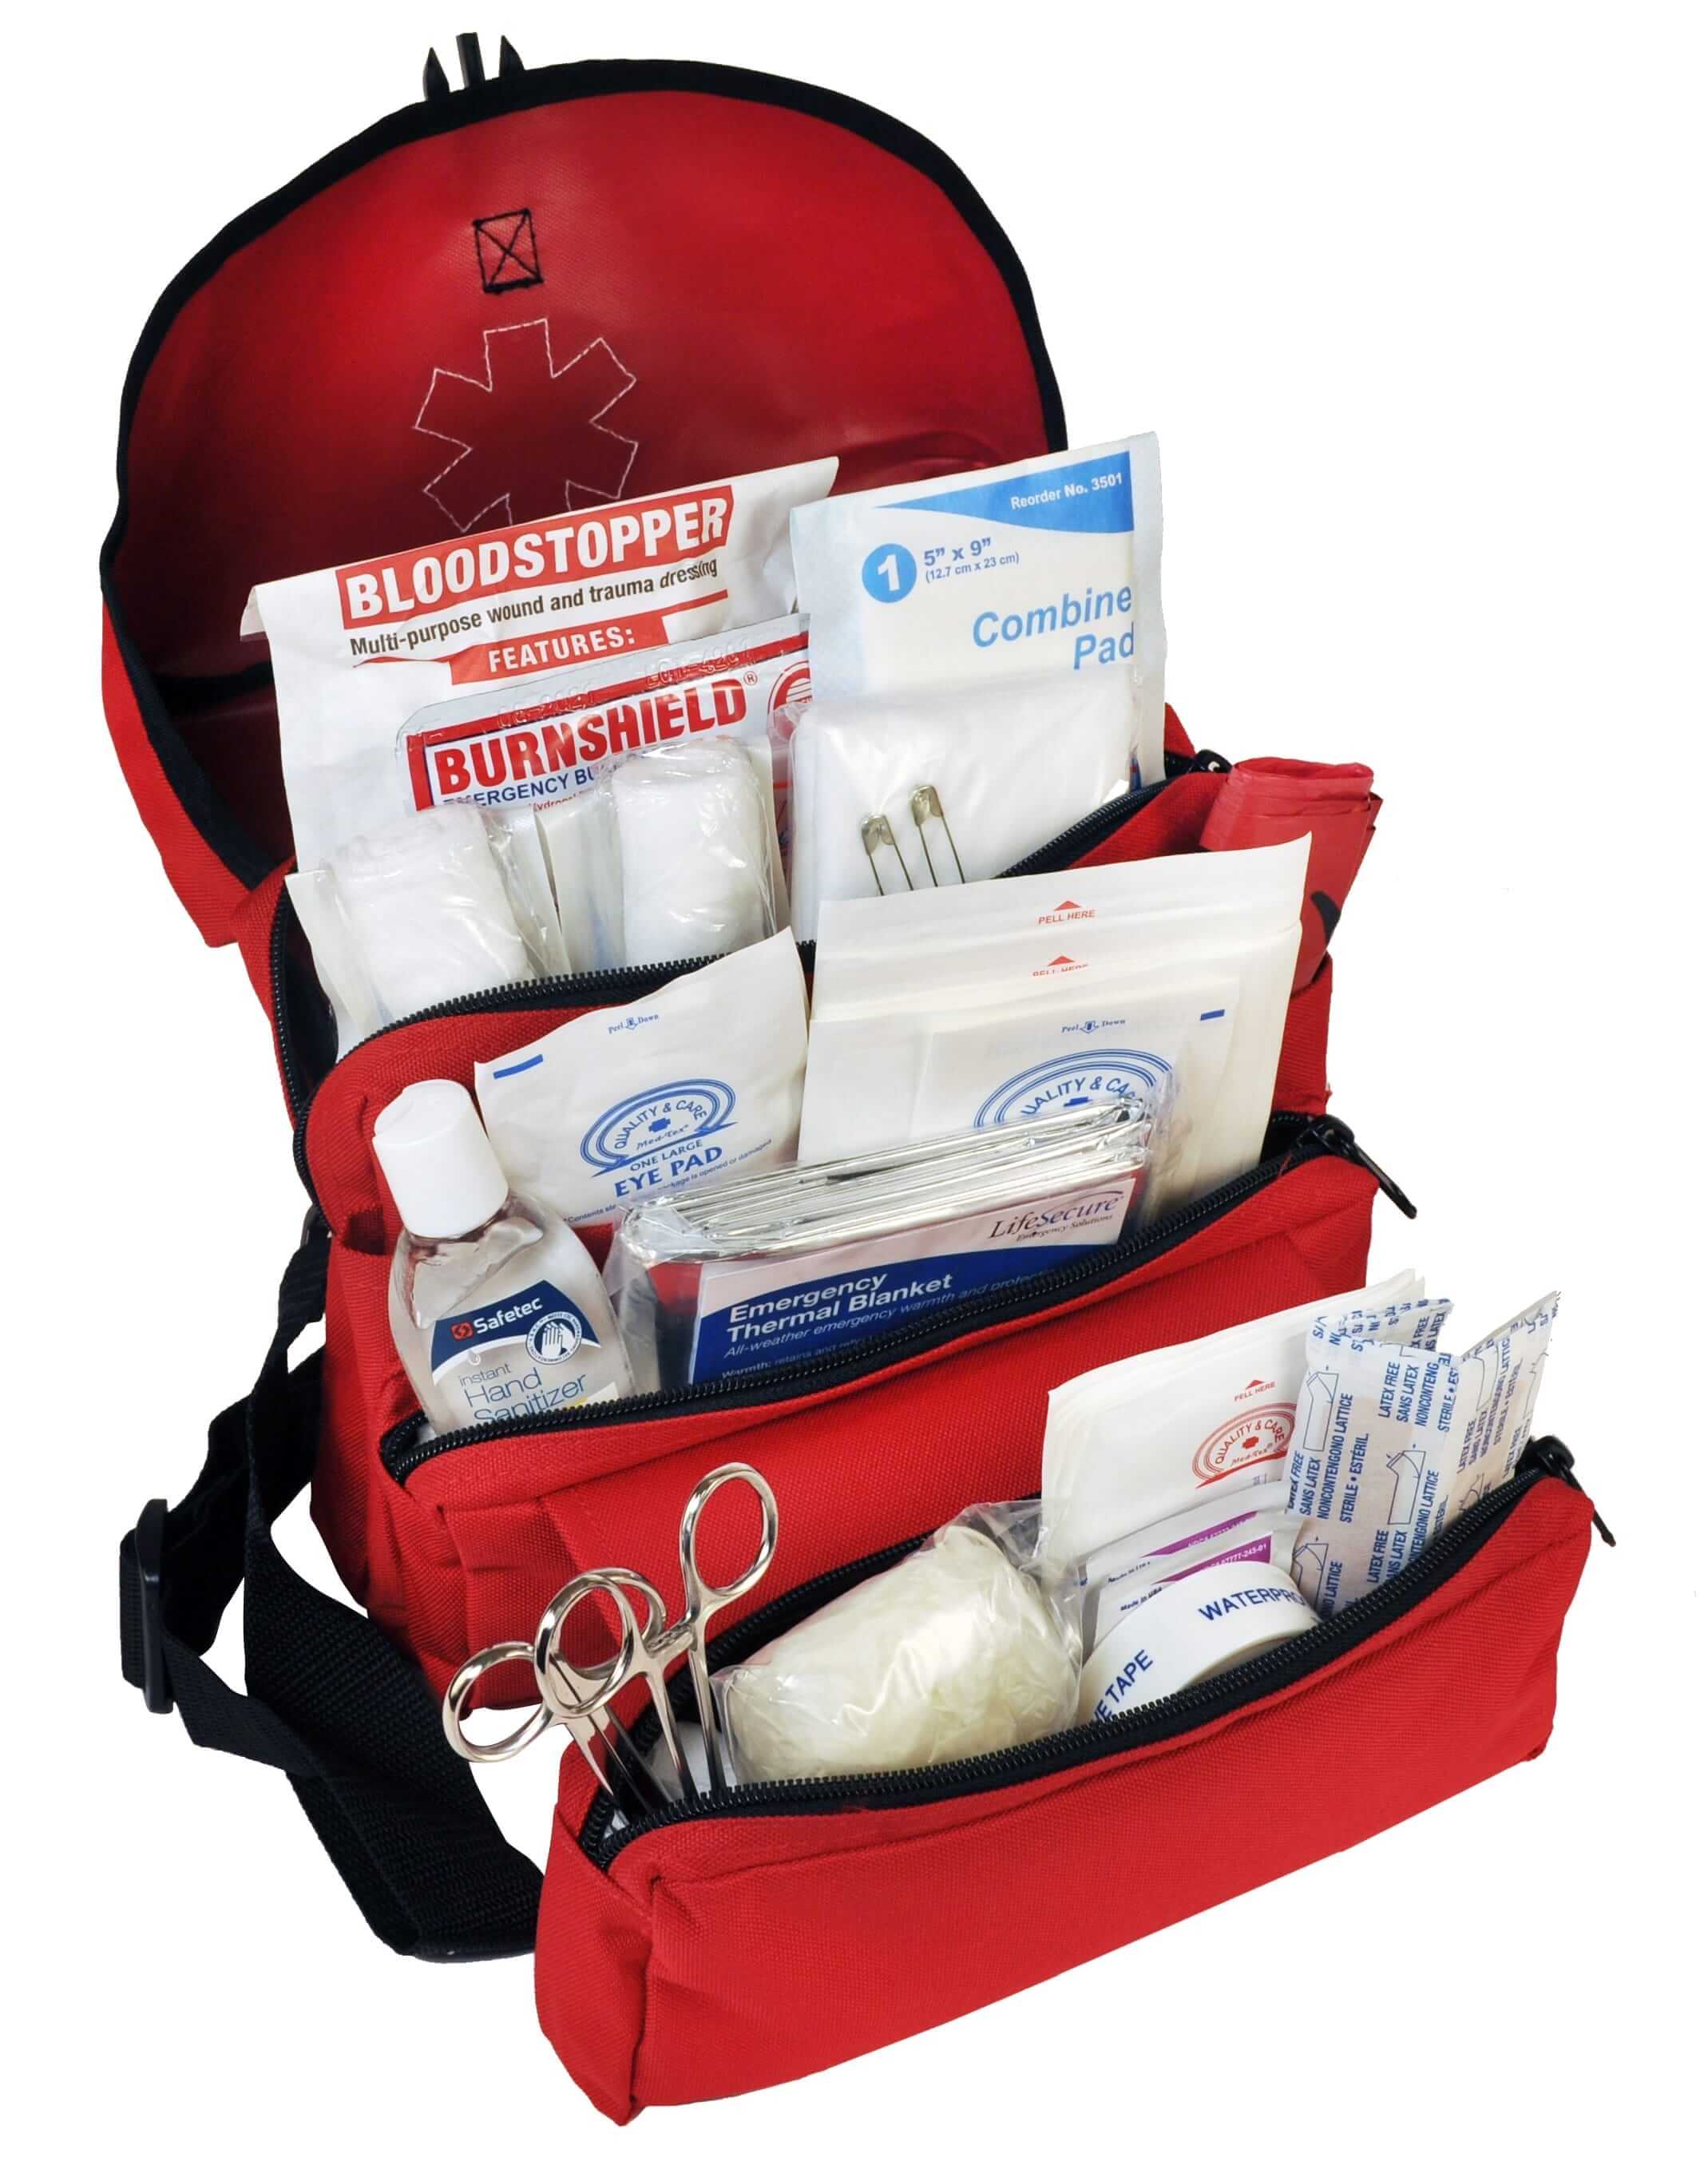 MobileAid SchoolGuard Grab-N-Go Trauma First Aid Kit (37120) - LifeSecure